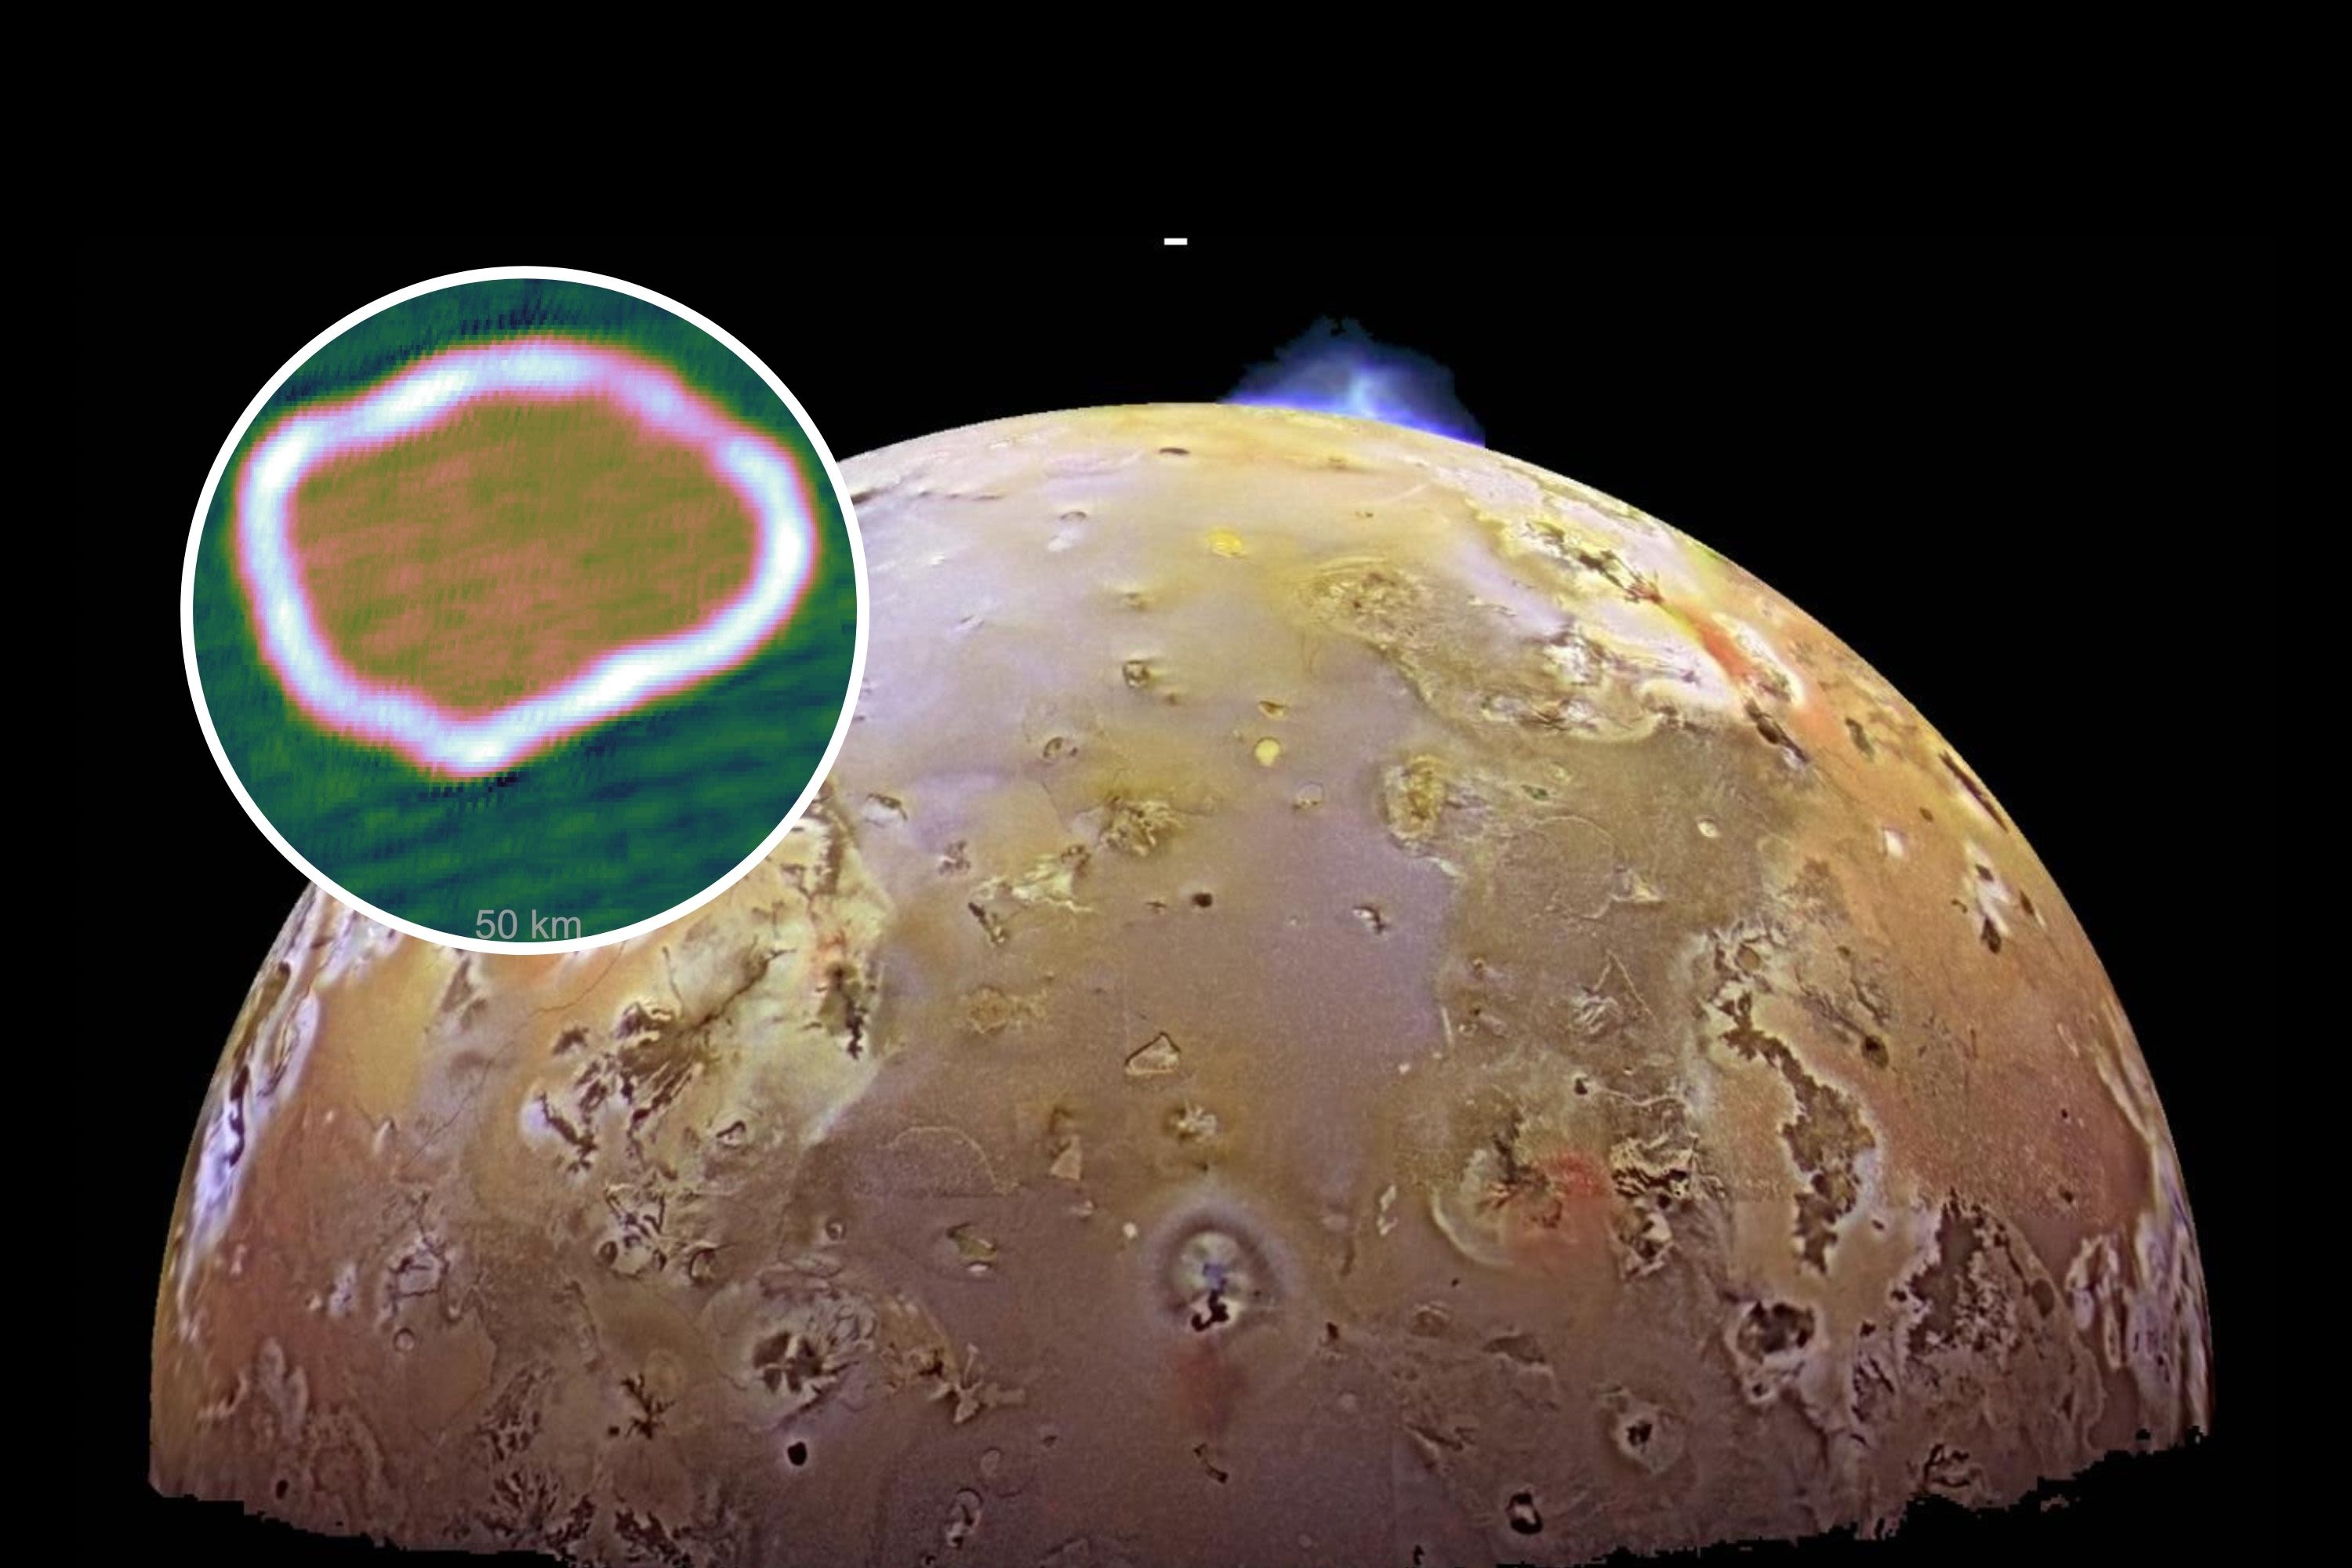 Lava lakes cover "whole surface" of Jupiter's moon Io, NASA reveals